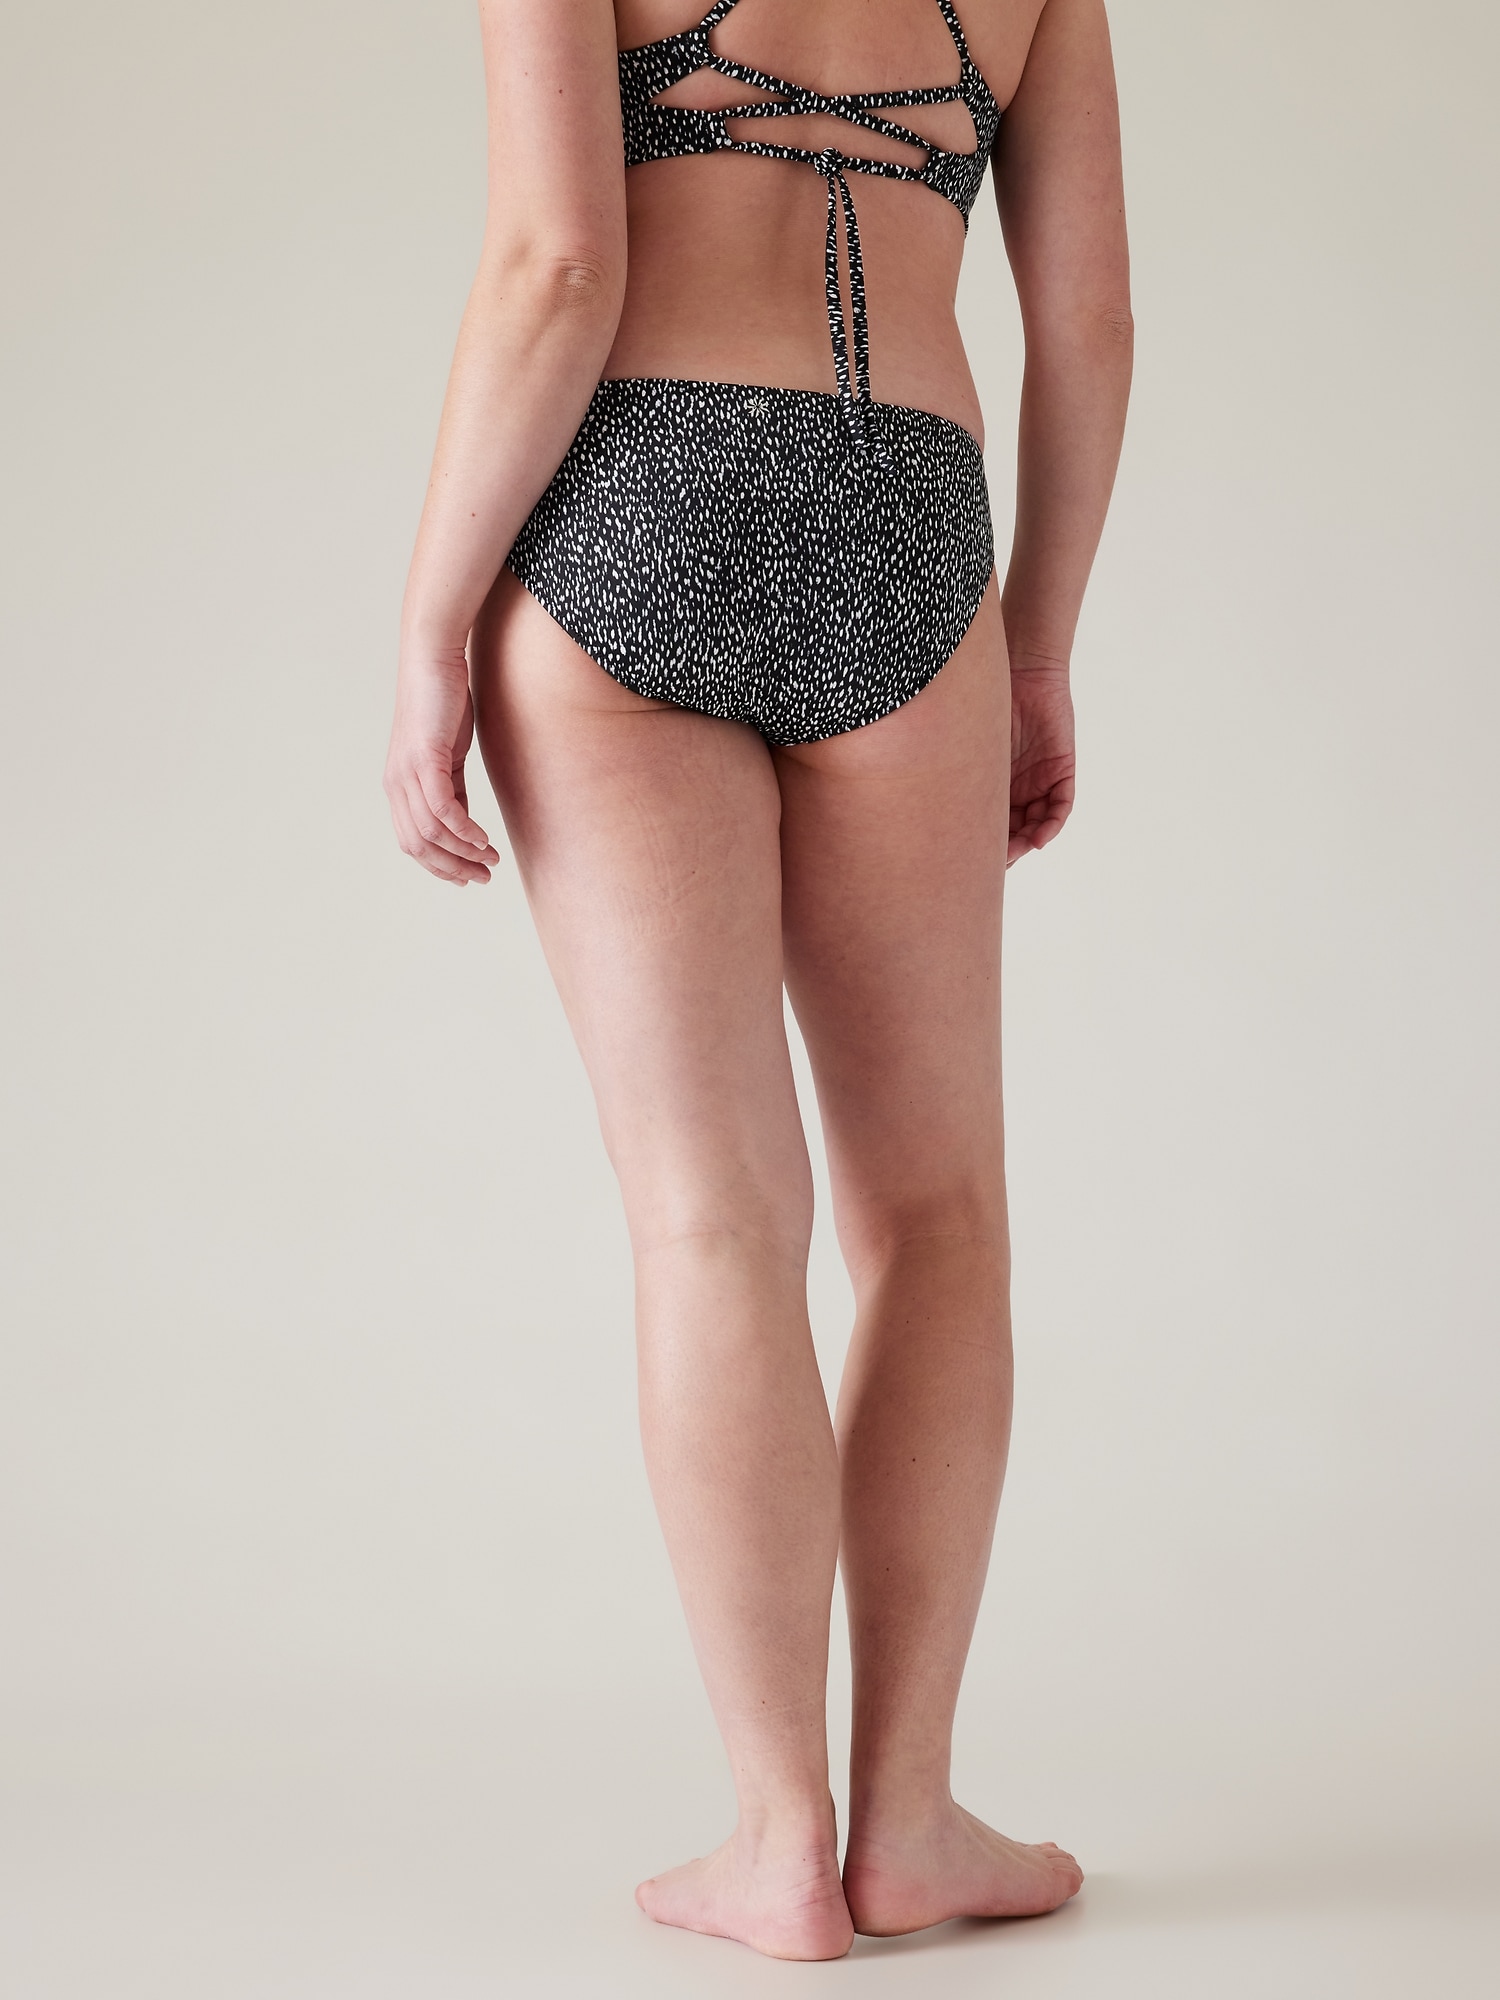 Swimsuit Bottoms - Bikini Styling / Elastic Stretch Fabric / Black